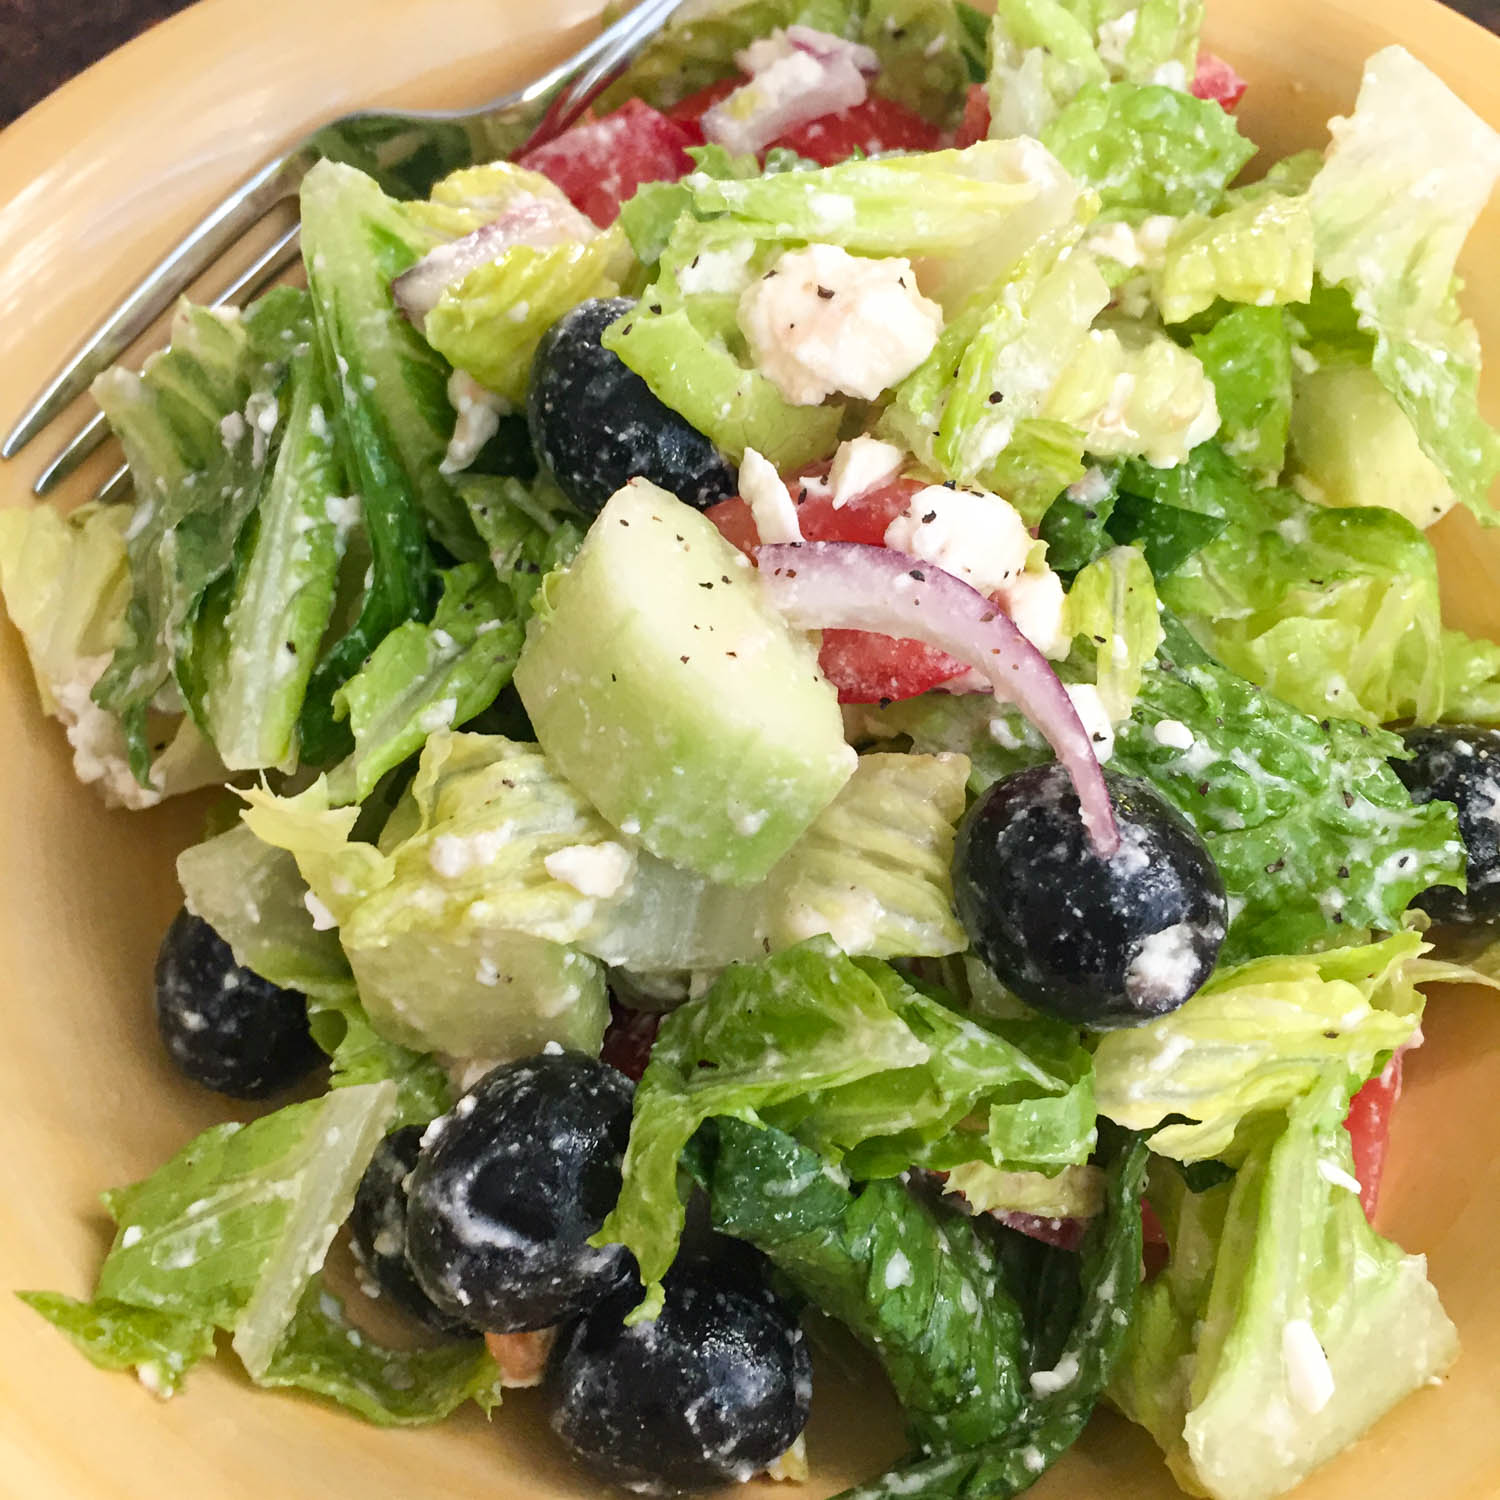 Greek Salad Recipe Using Lemon Juice and Olive Oil for Dressing